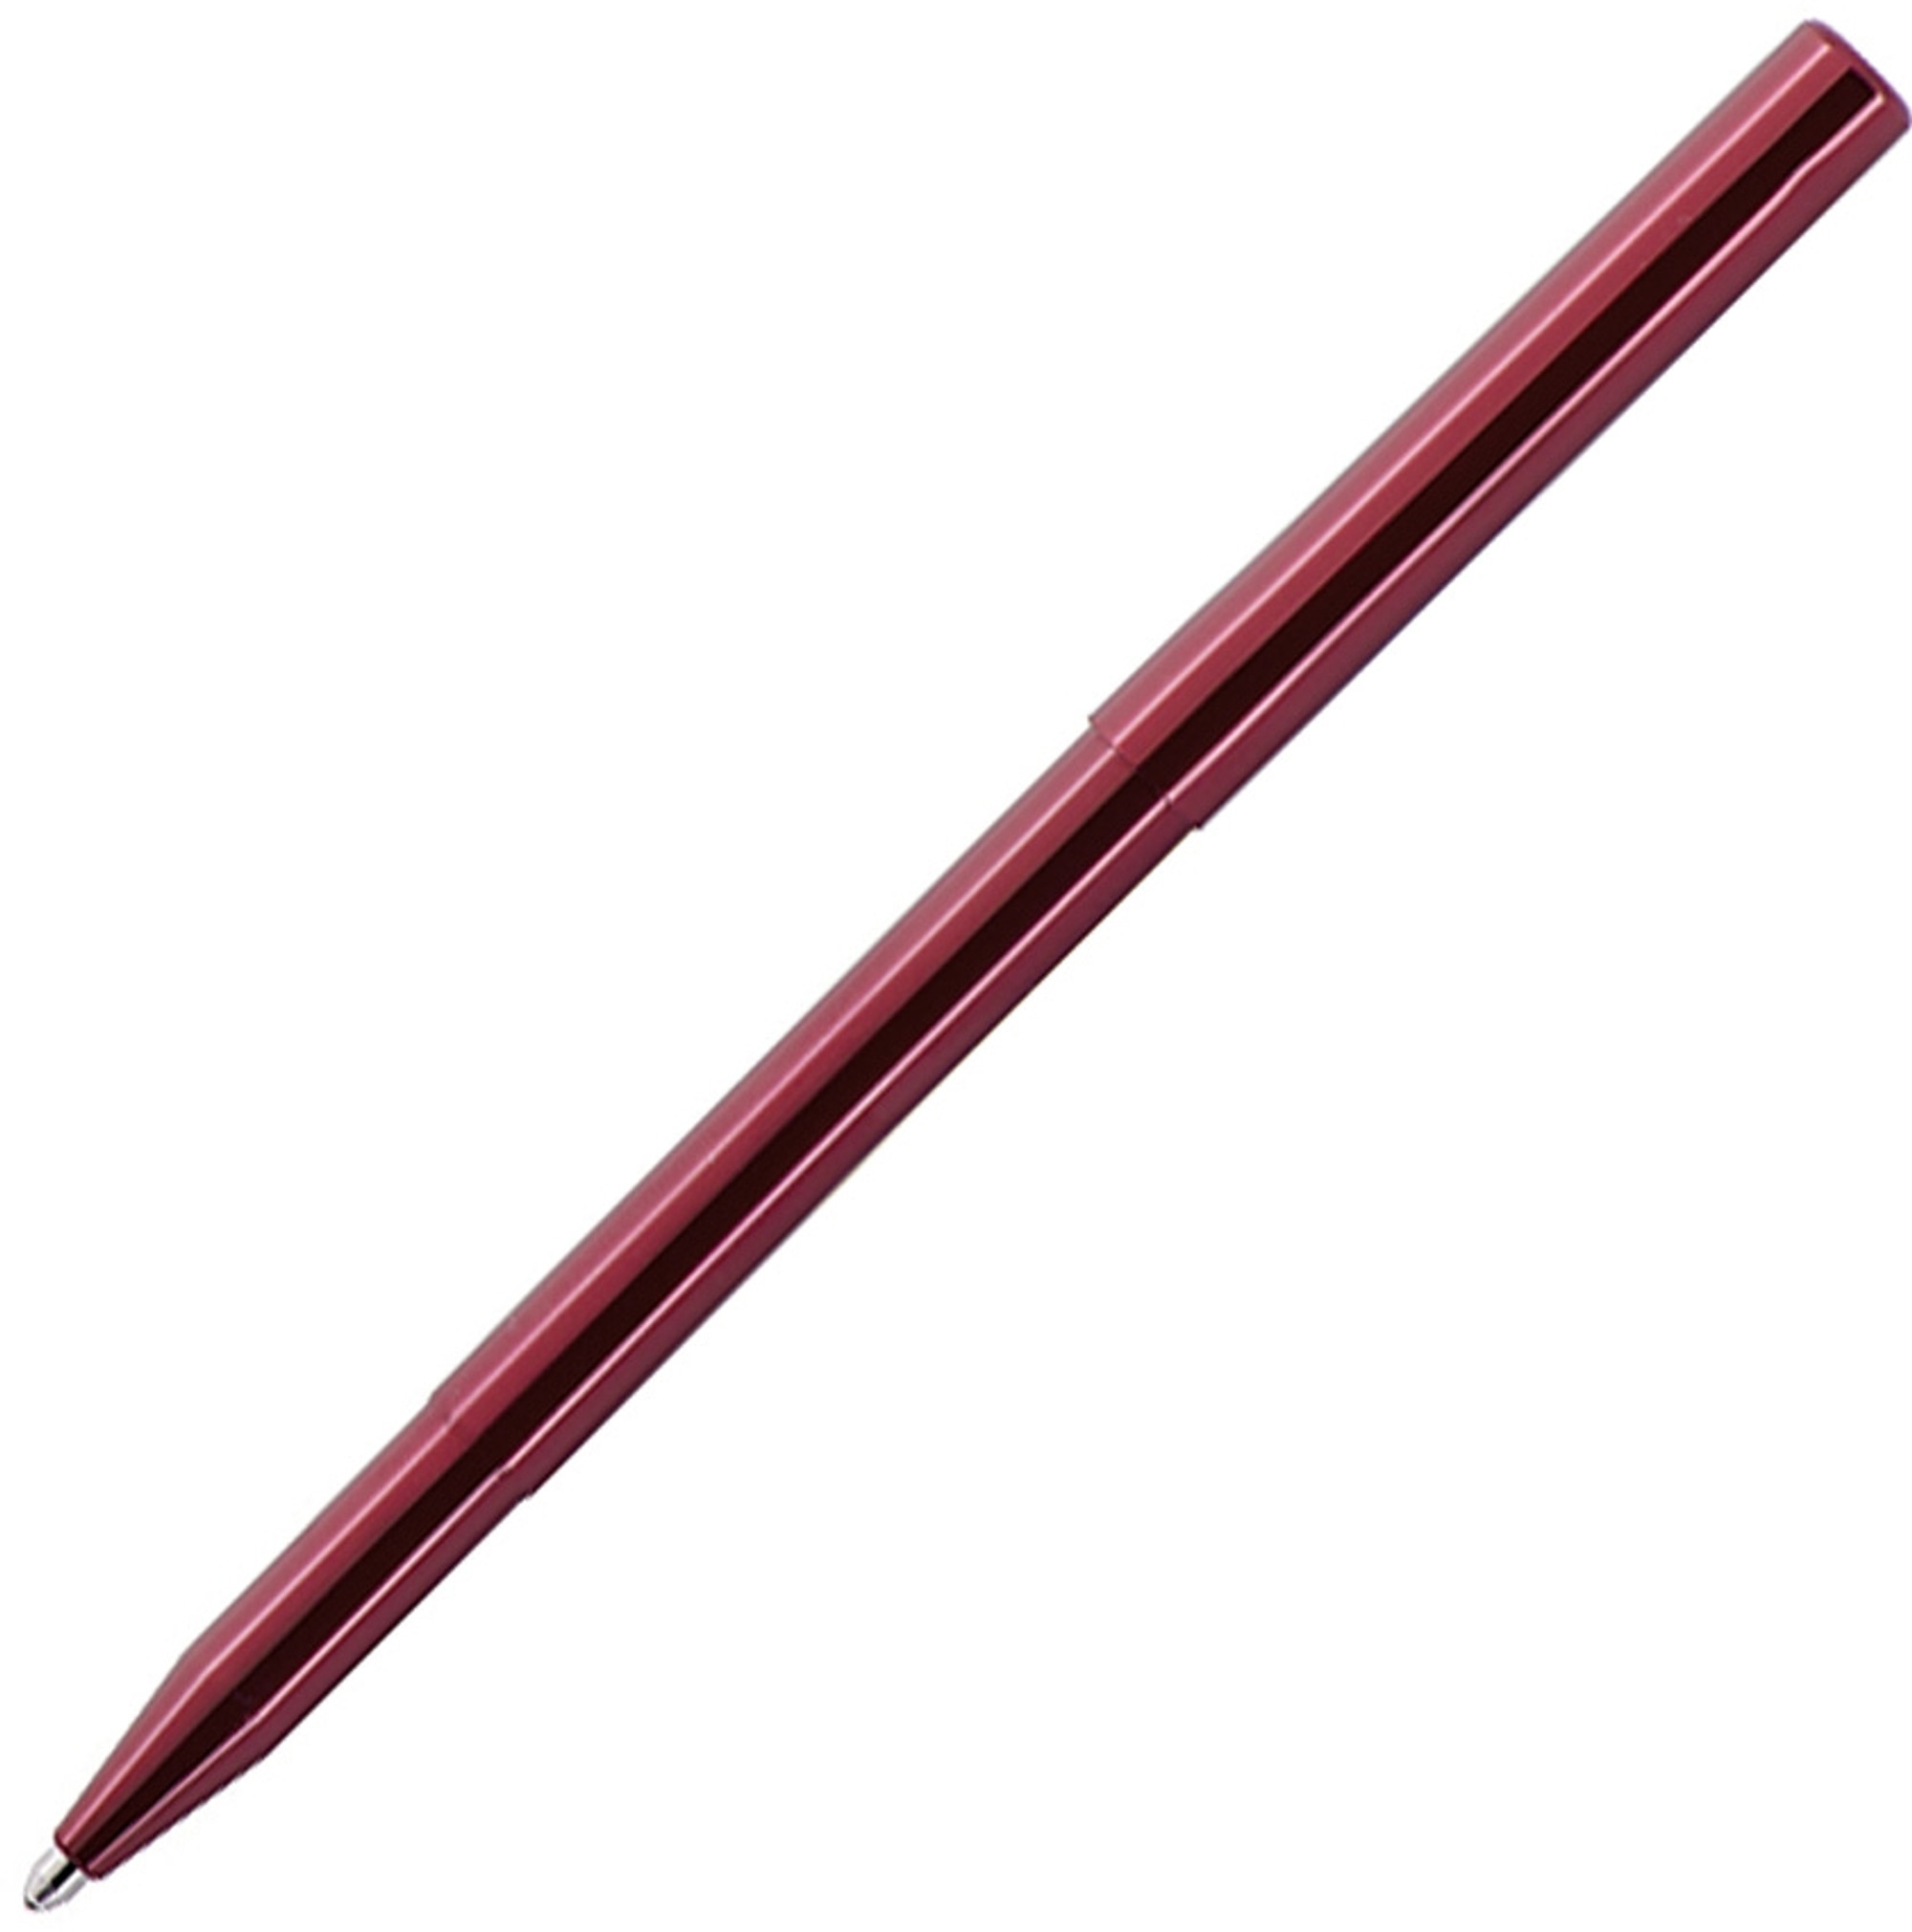 The Stowaway Pen Red